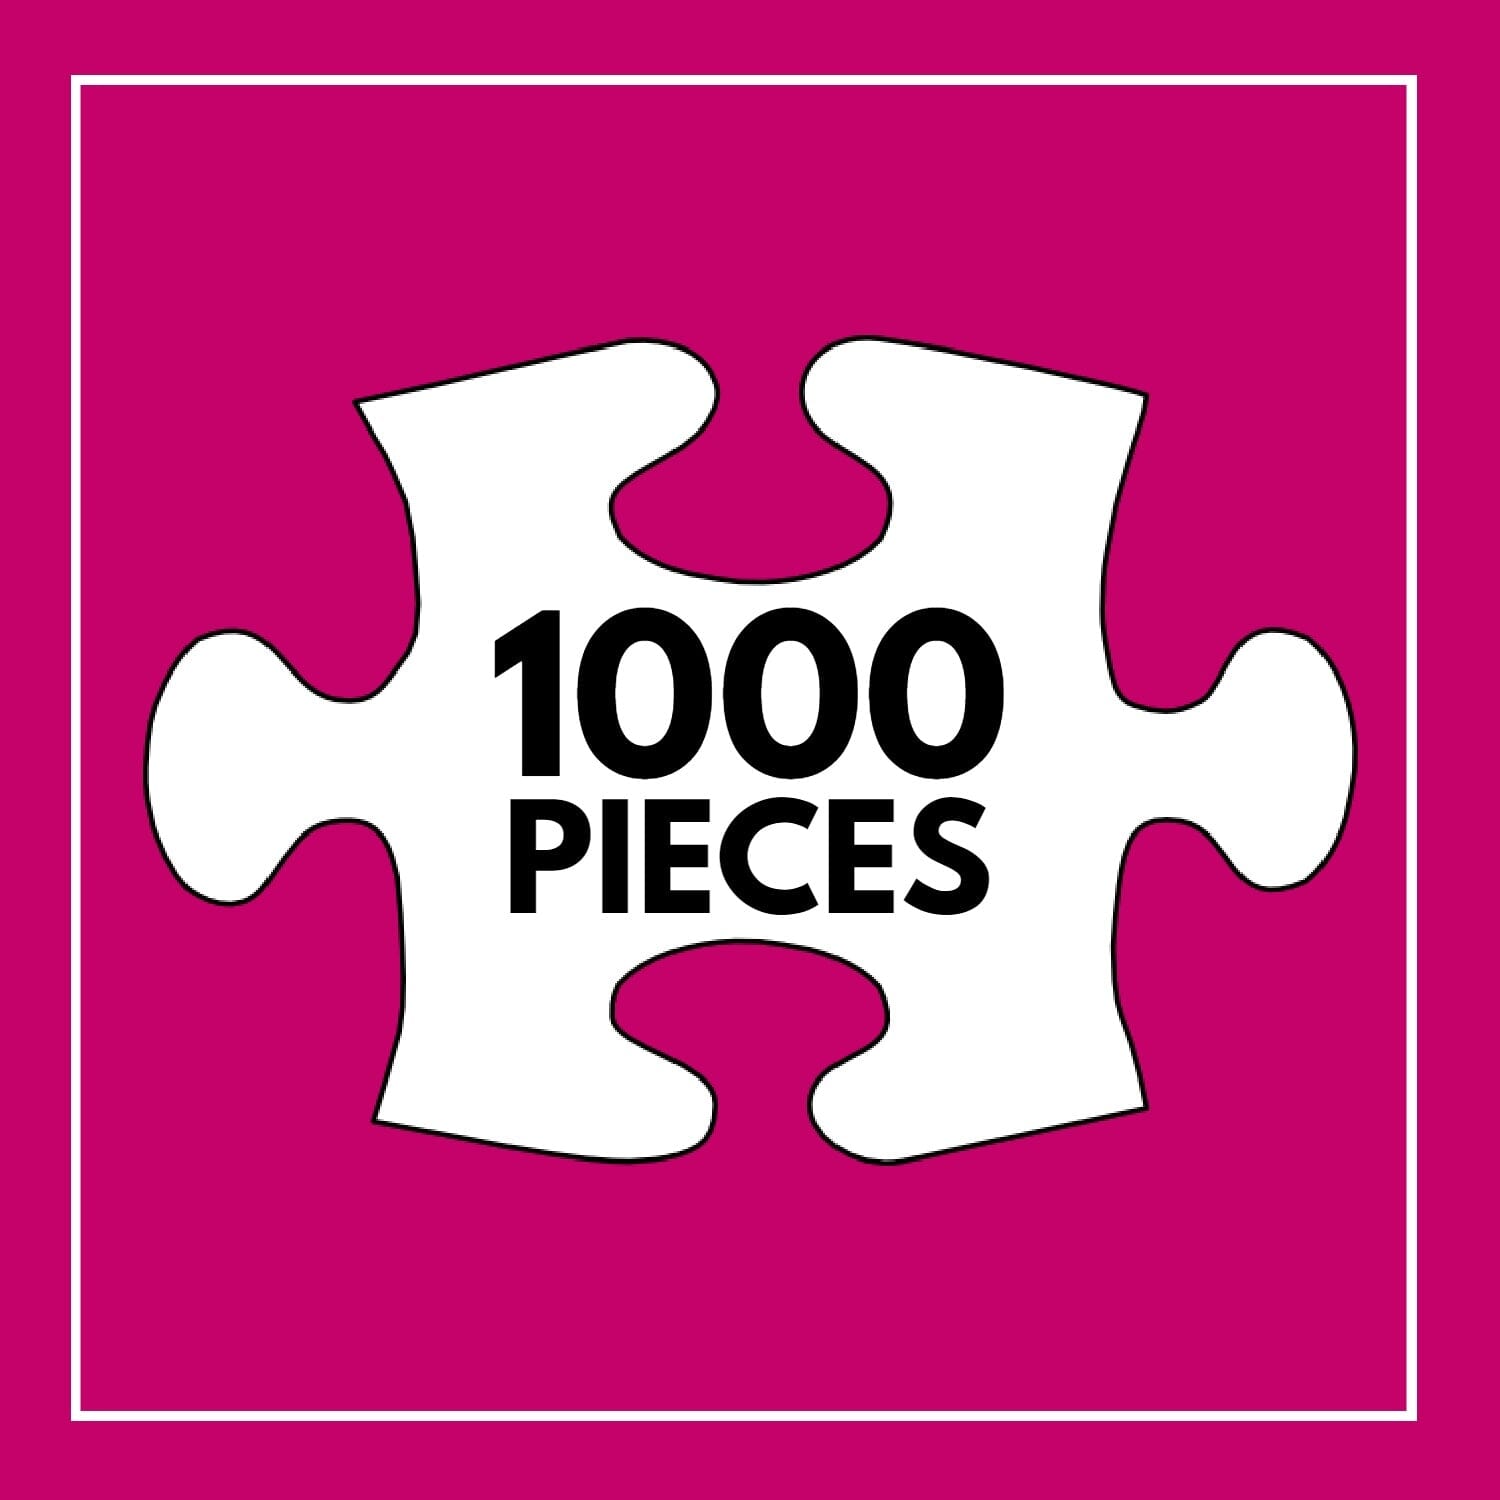 Succulent Symphony - 1000 Piece Jigsaw Puzzle Jigsaw Puzzles Cross & Glory